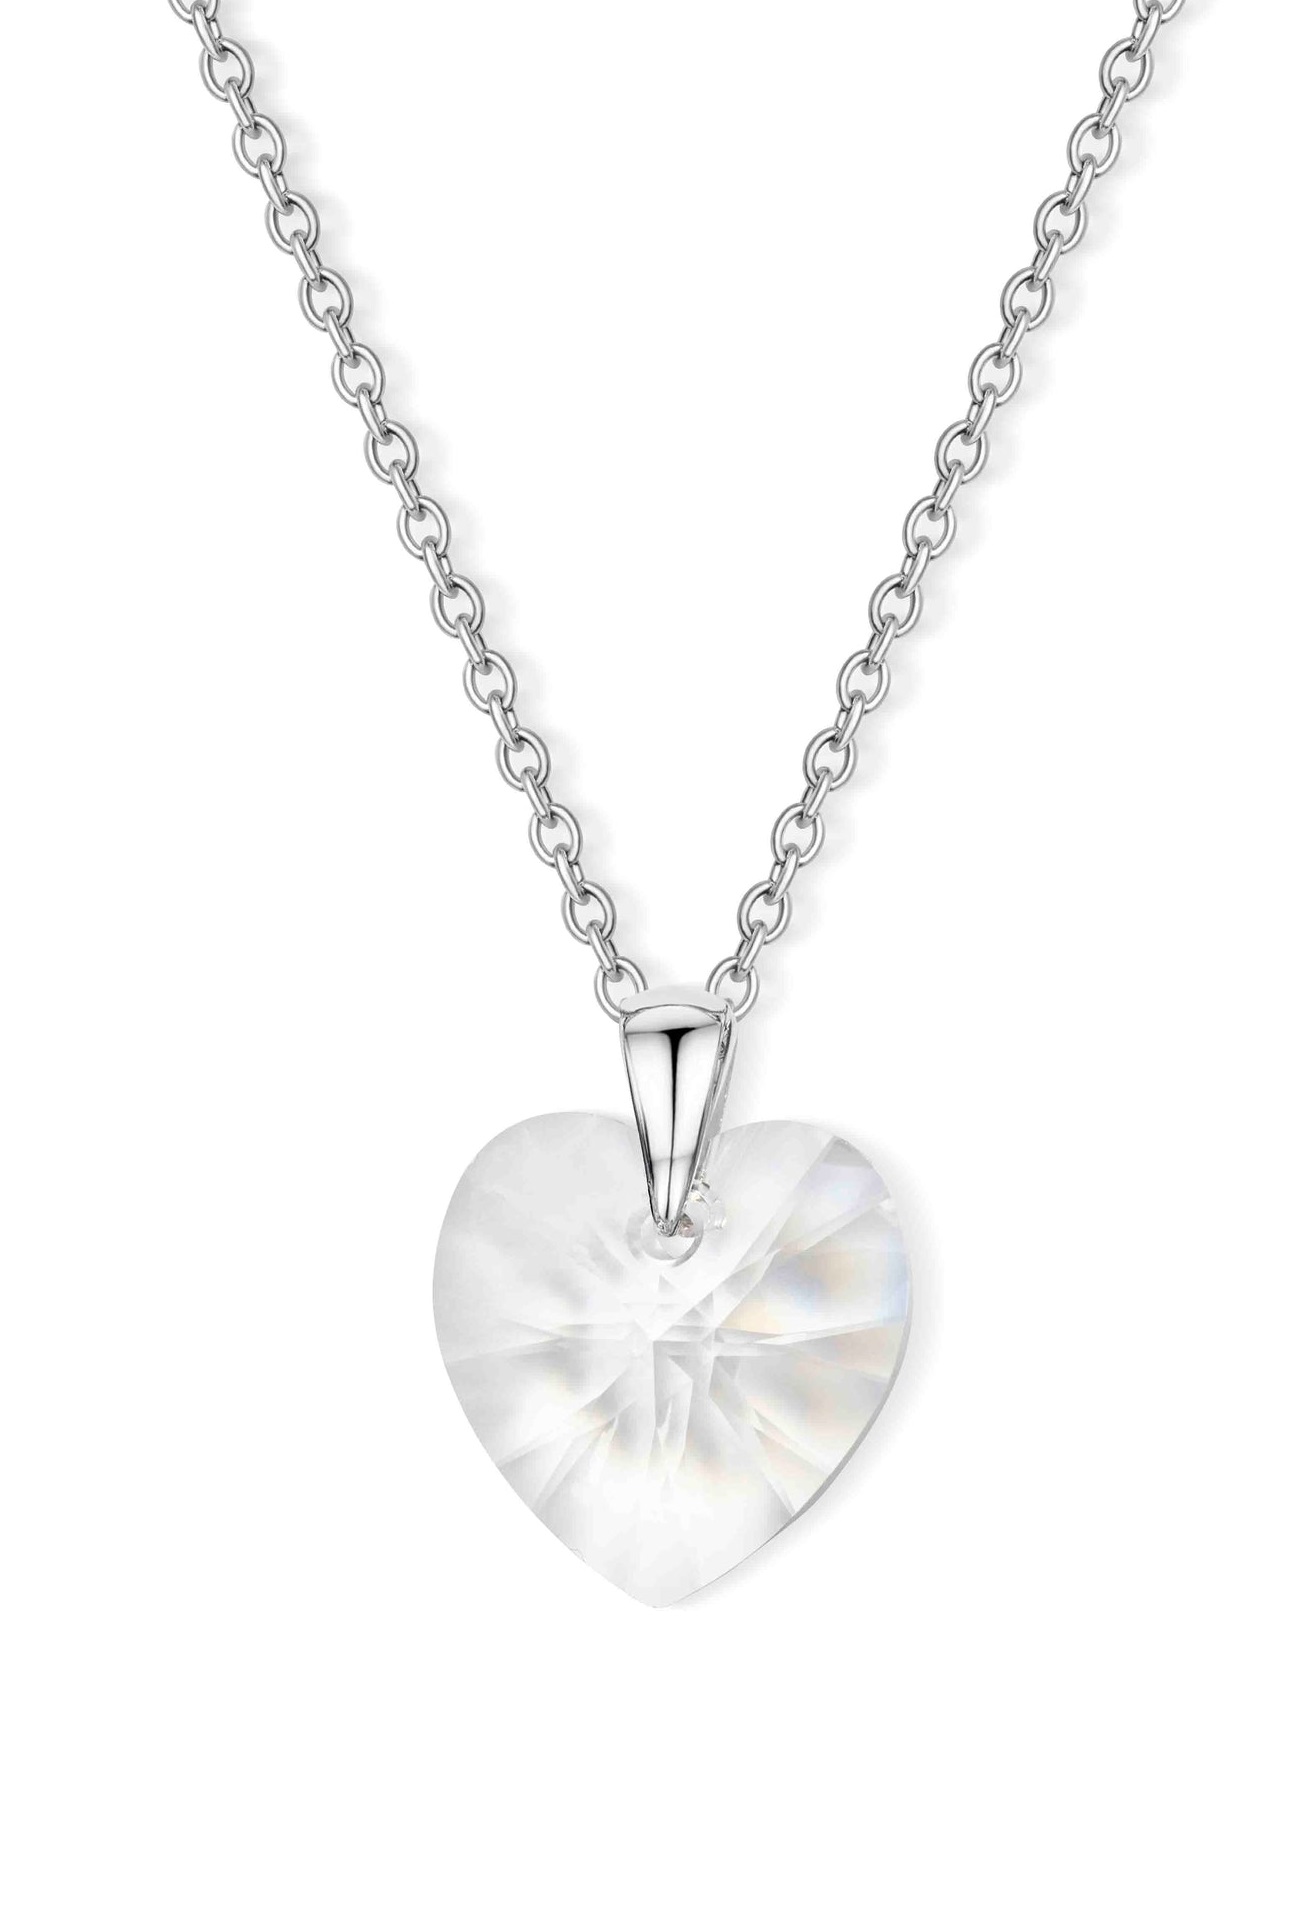 CRYSTalp Romantický náhrdelník so srdcom Lovely Heart 3048.CAB.R